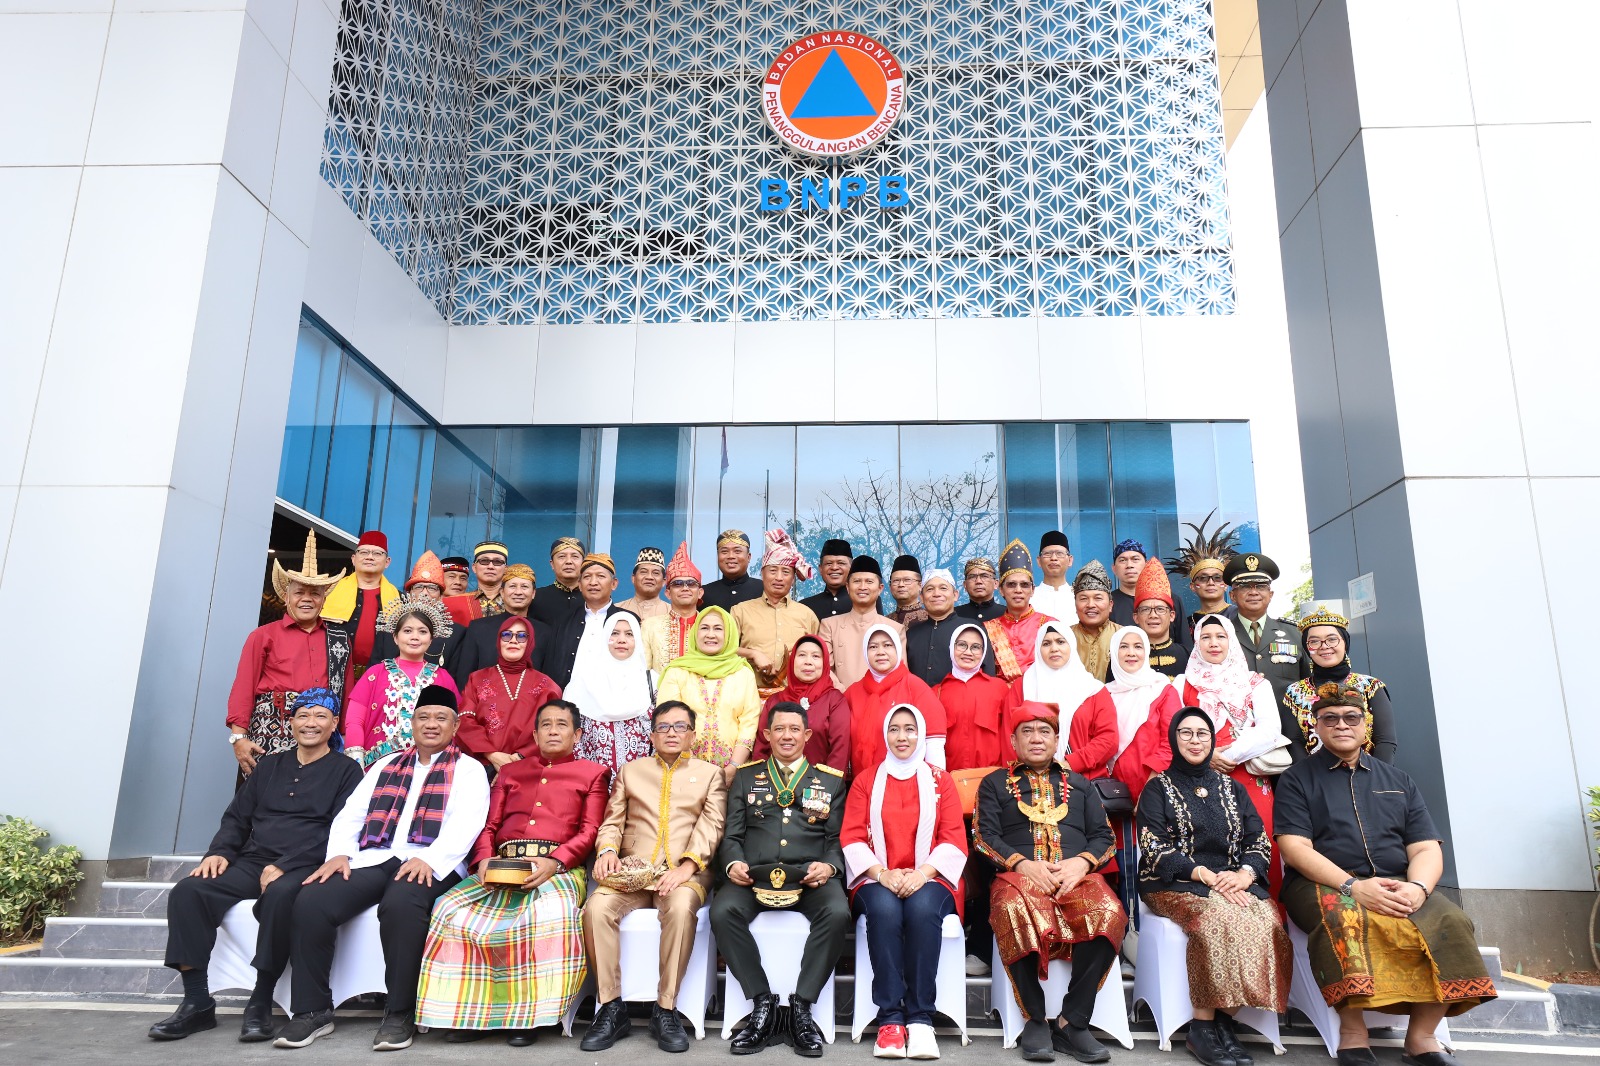 Kepala BNPB dan Jajaran melakukan foto bersama menggunakan pakaian adat setelah upacara Hari Ulang Tahun Ke-78 Republik Indonesia, yang diselenggarakan di halaman Gedung Graha BNPB, Jakarta pada (17/8). 